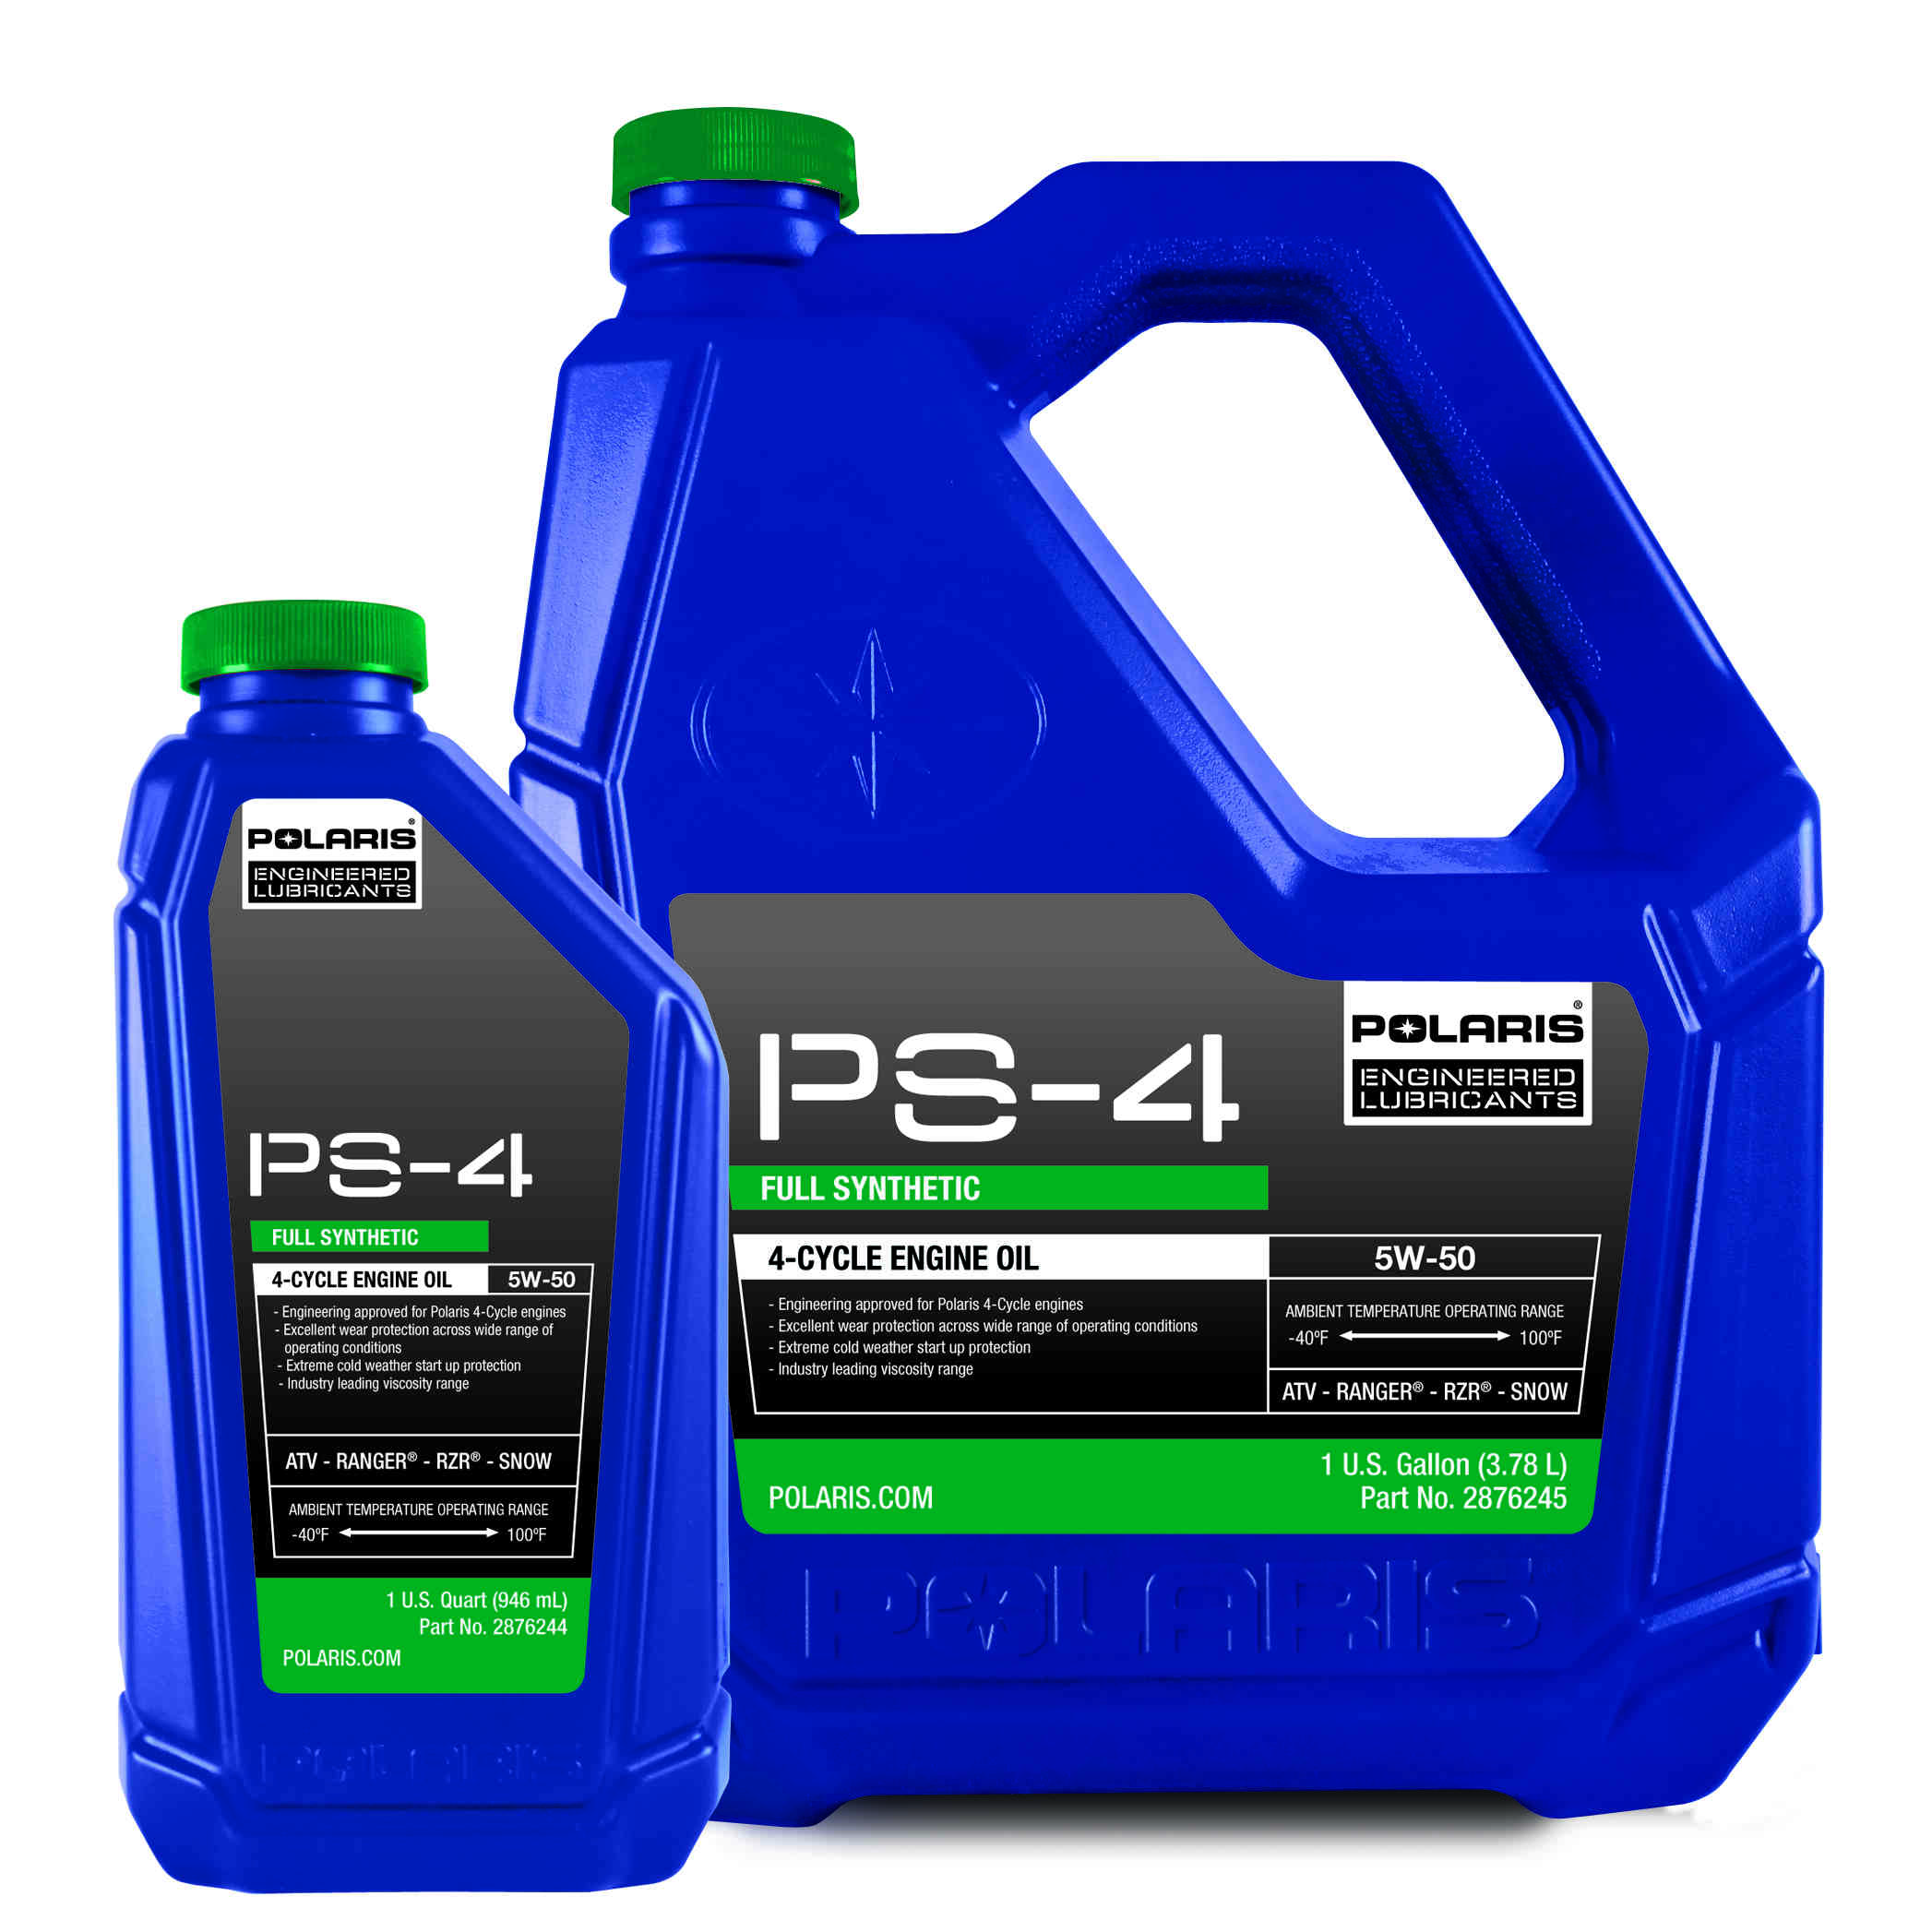 PS4 FullSynthetic Oil Polaris Lubricants